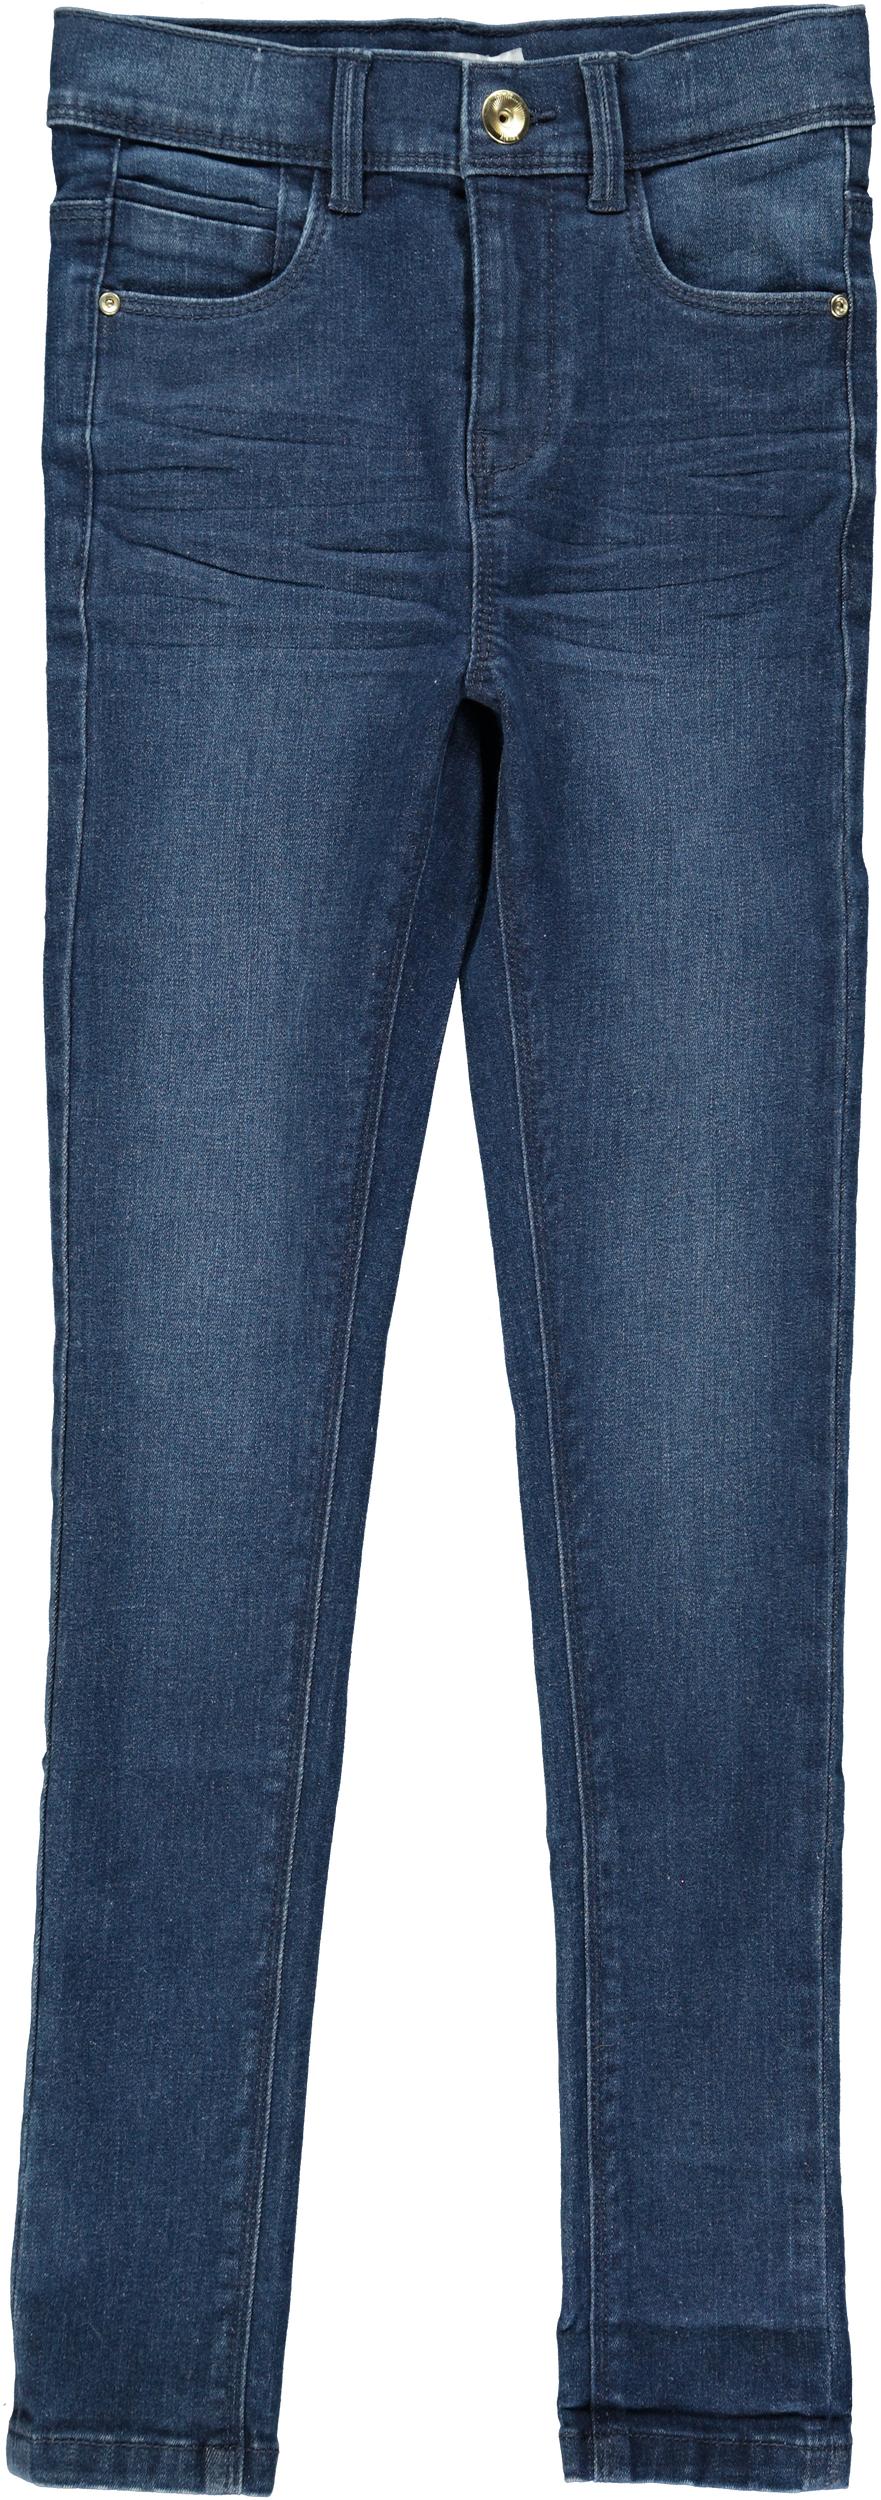  Polly Jeans, Medium Blue Denim, 116 cm